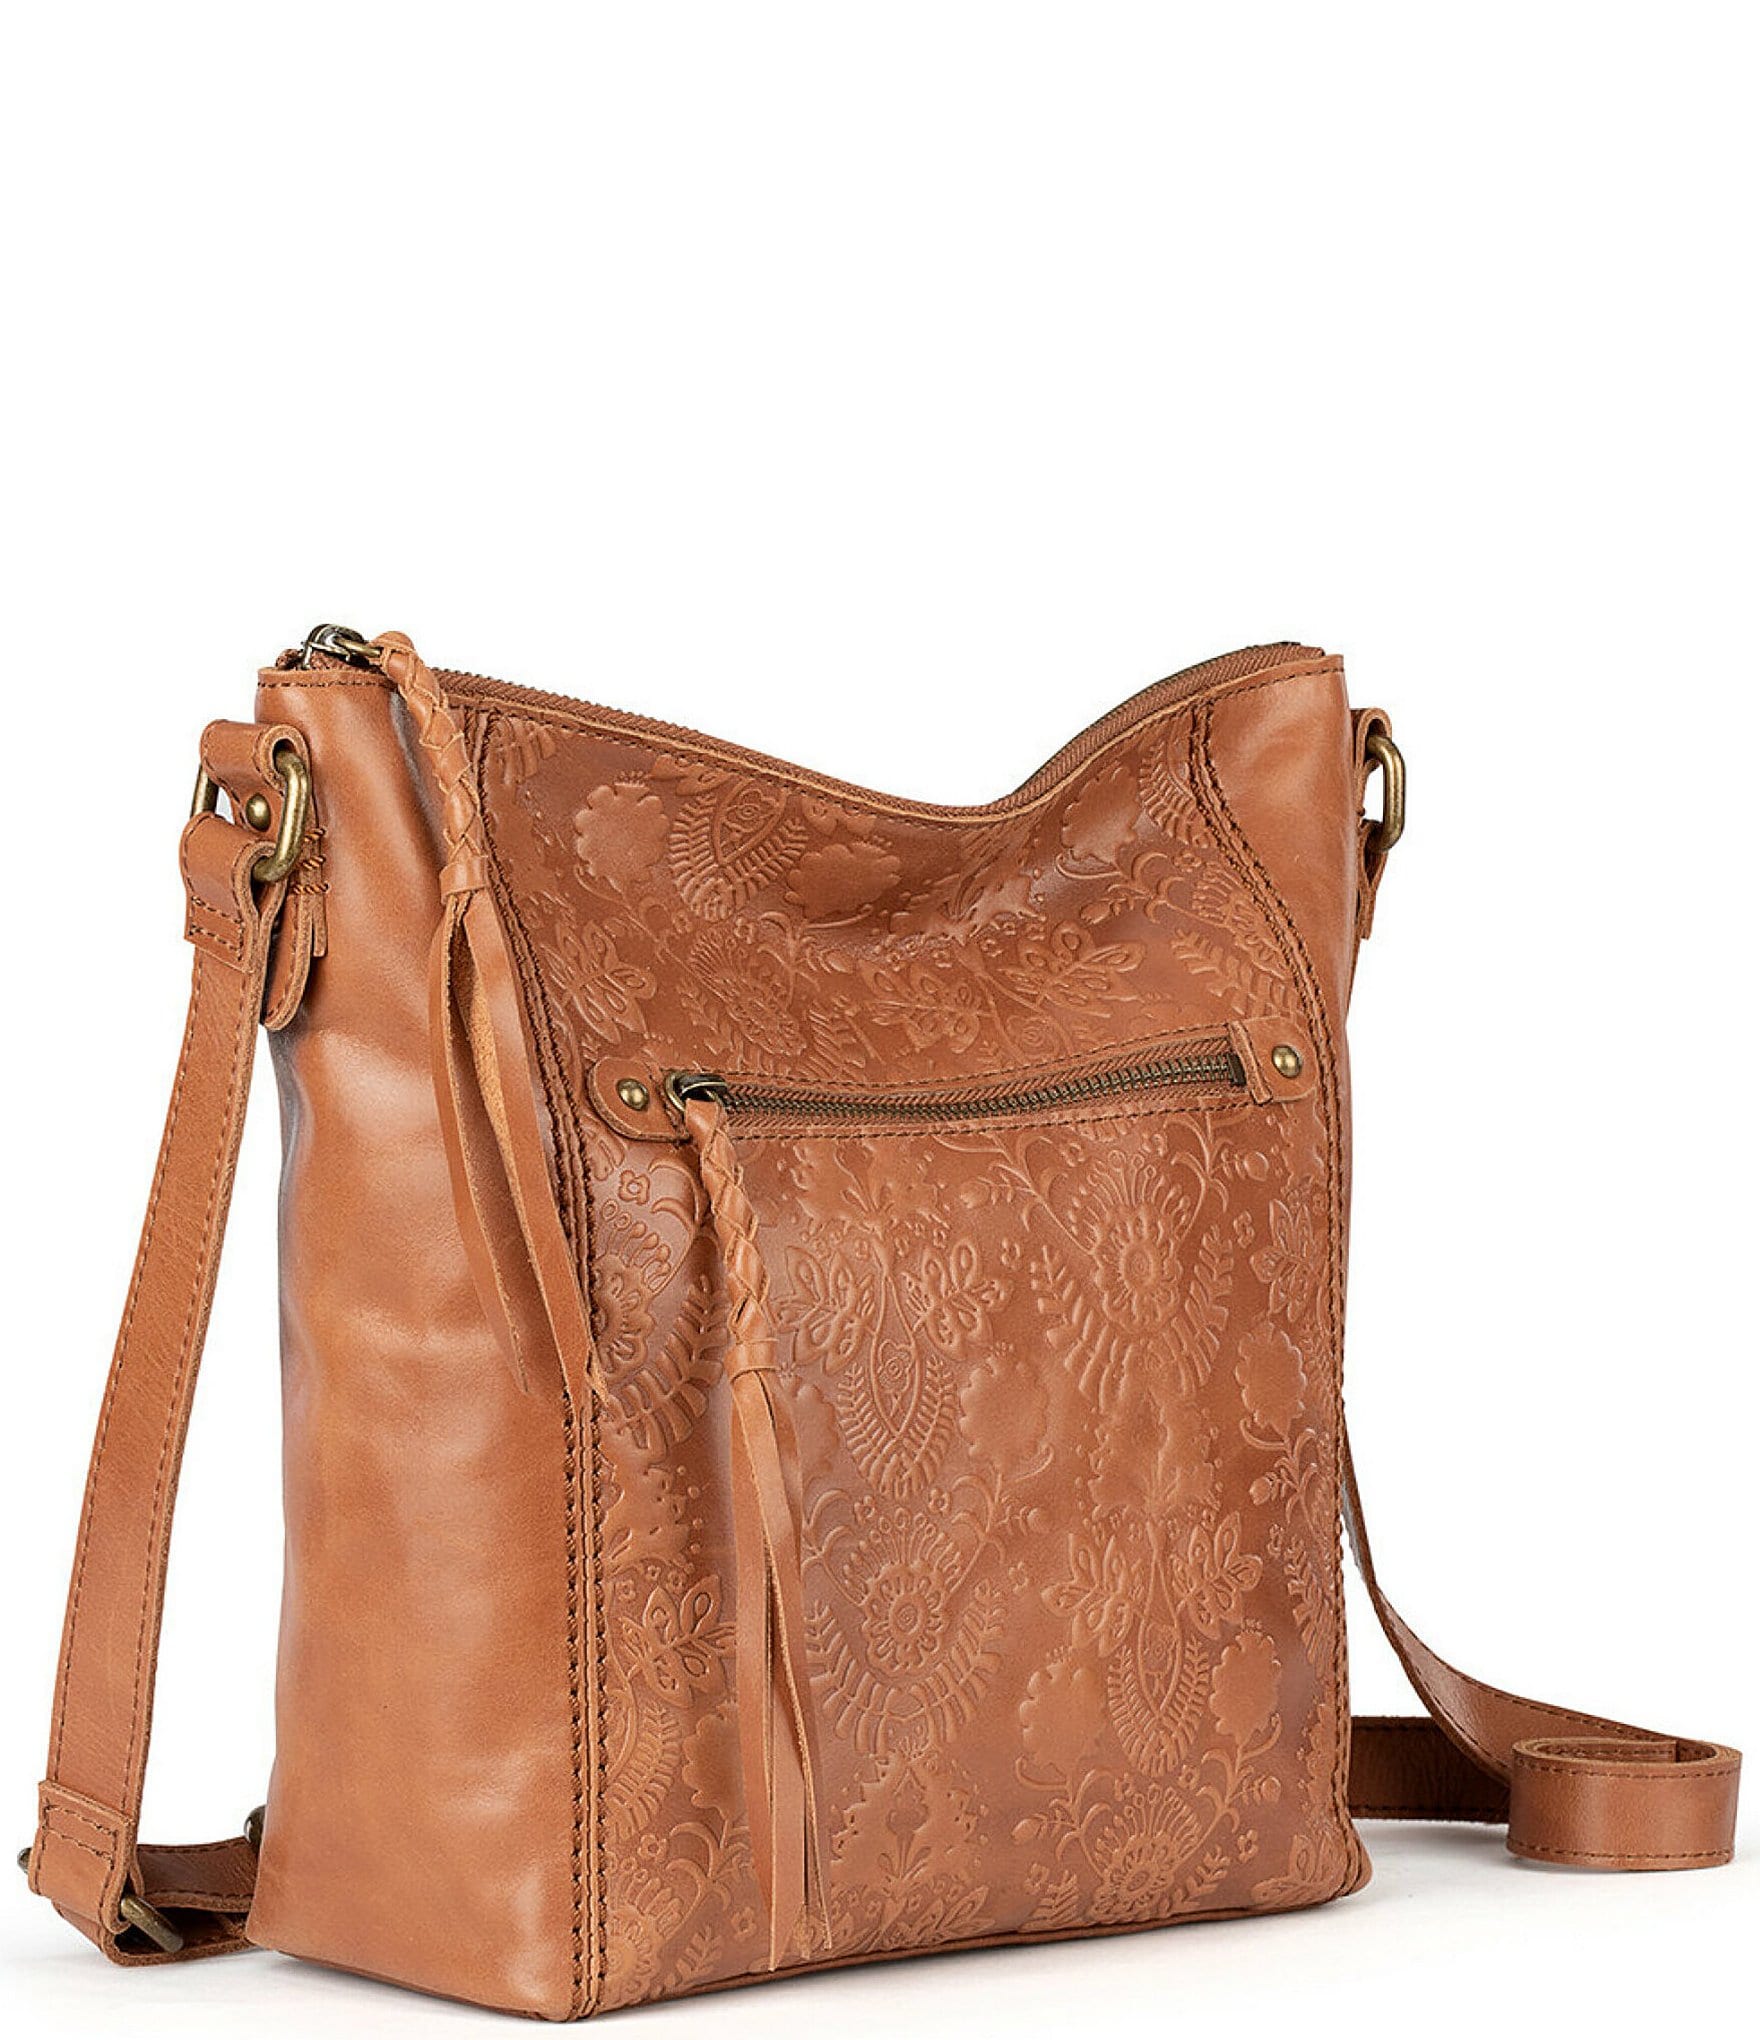 The Sak Sequoia Leather Hobo Bag  Dillards